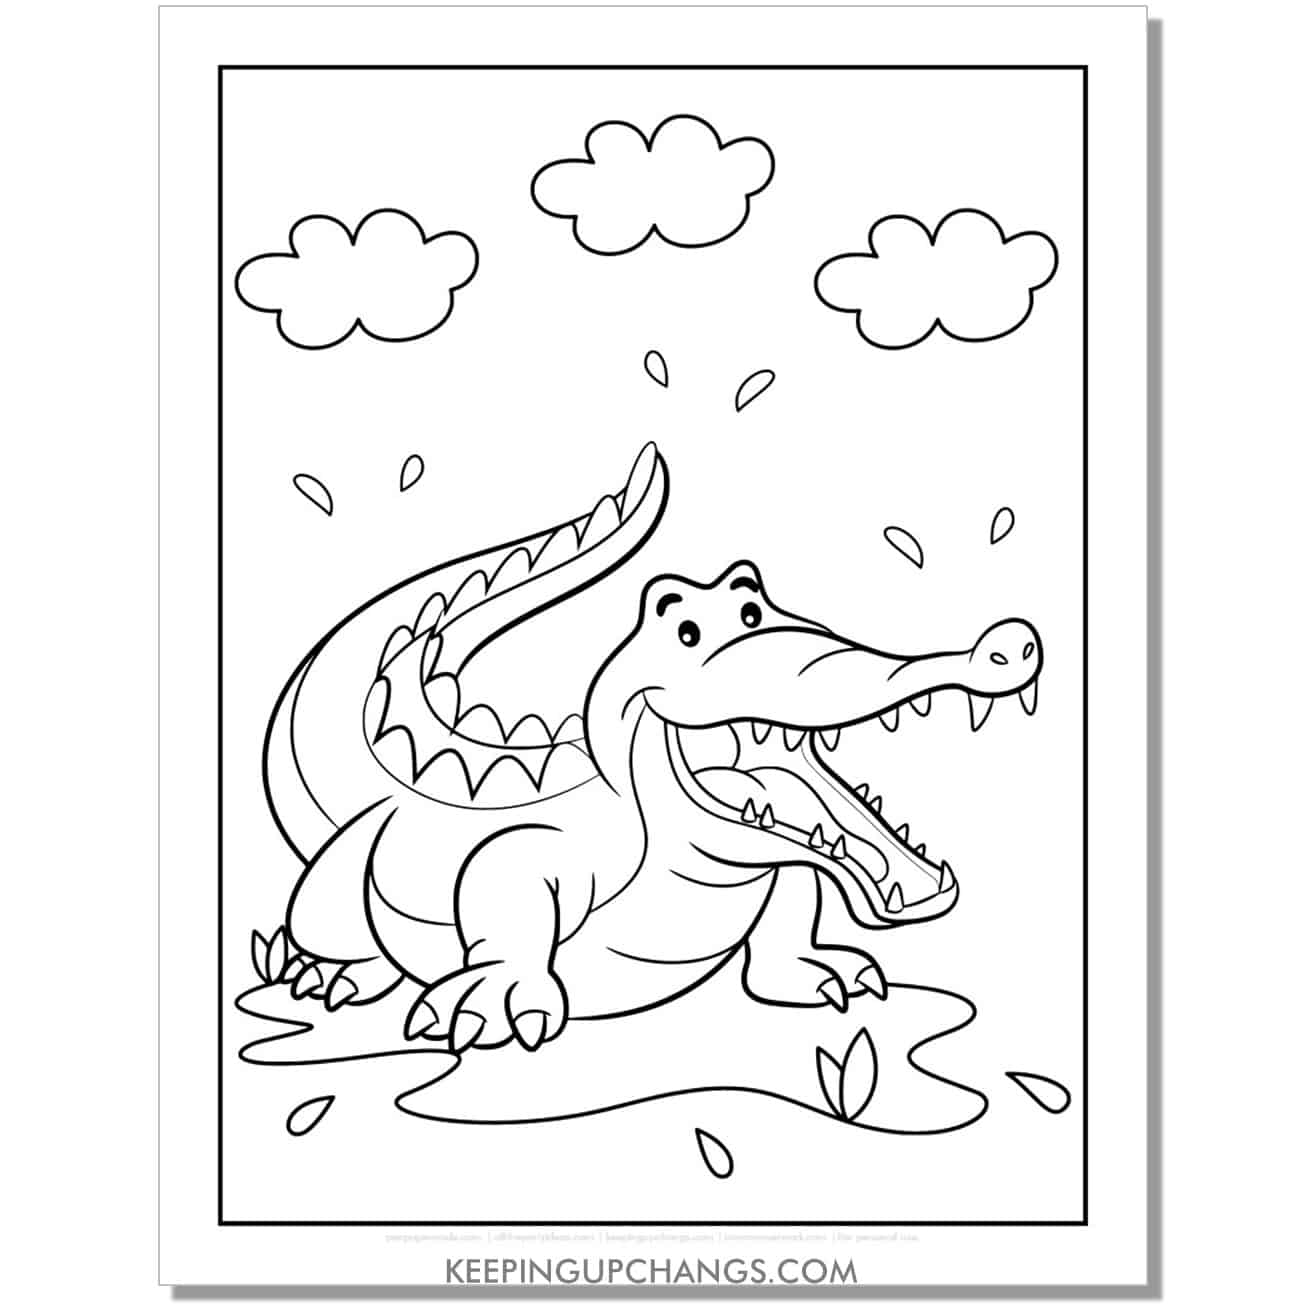 free cute alligator, crocodile cartoon drawing coloring page, sheet.